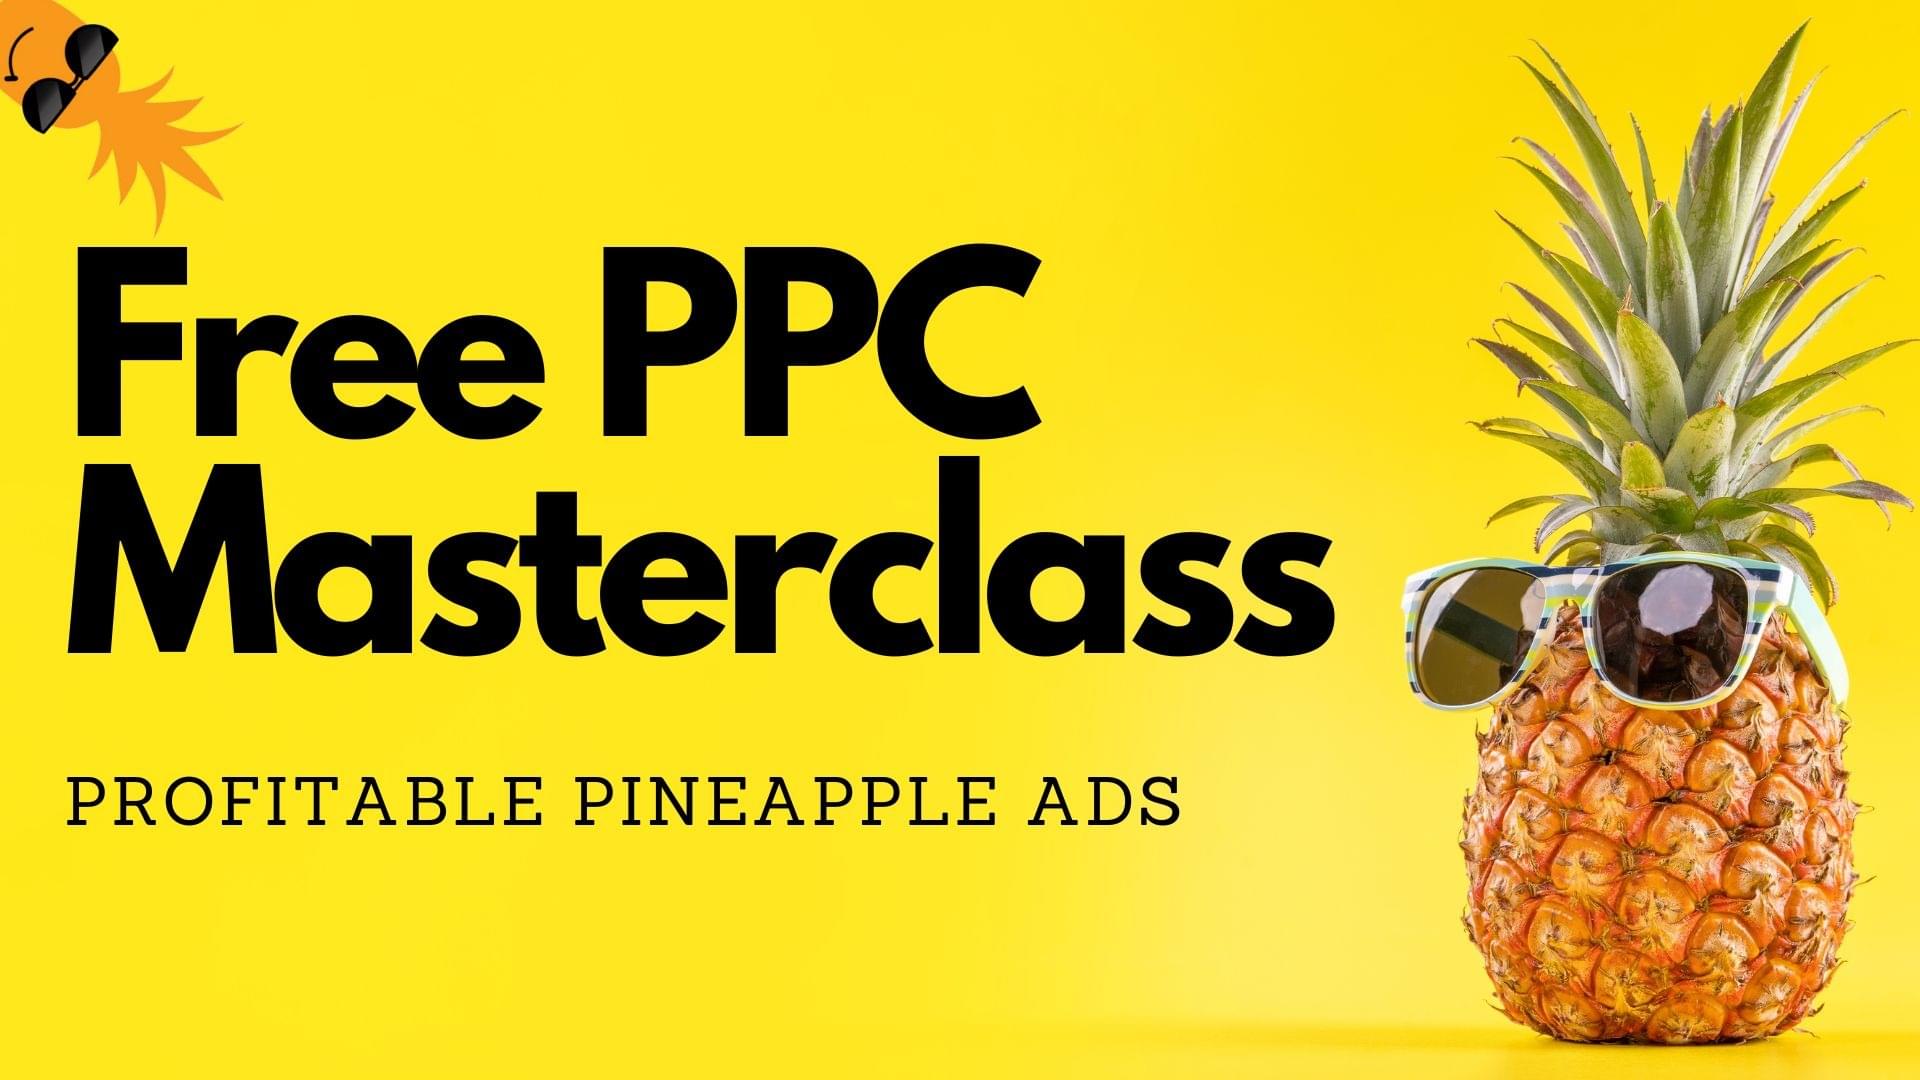 Free PPC Masterclass